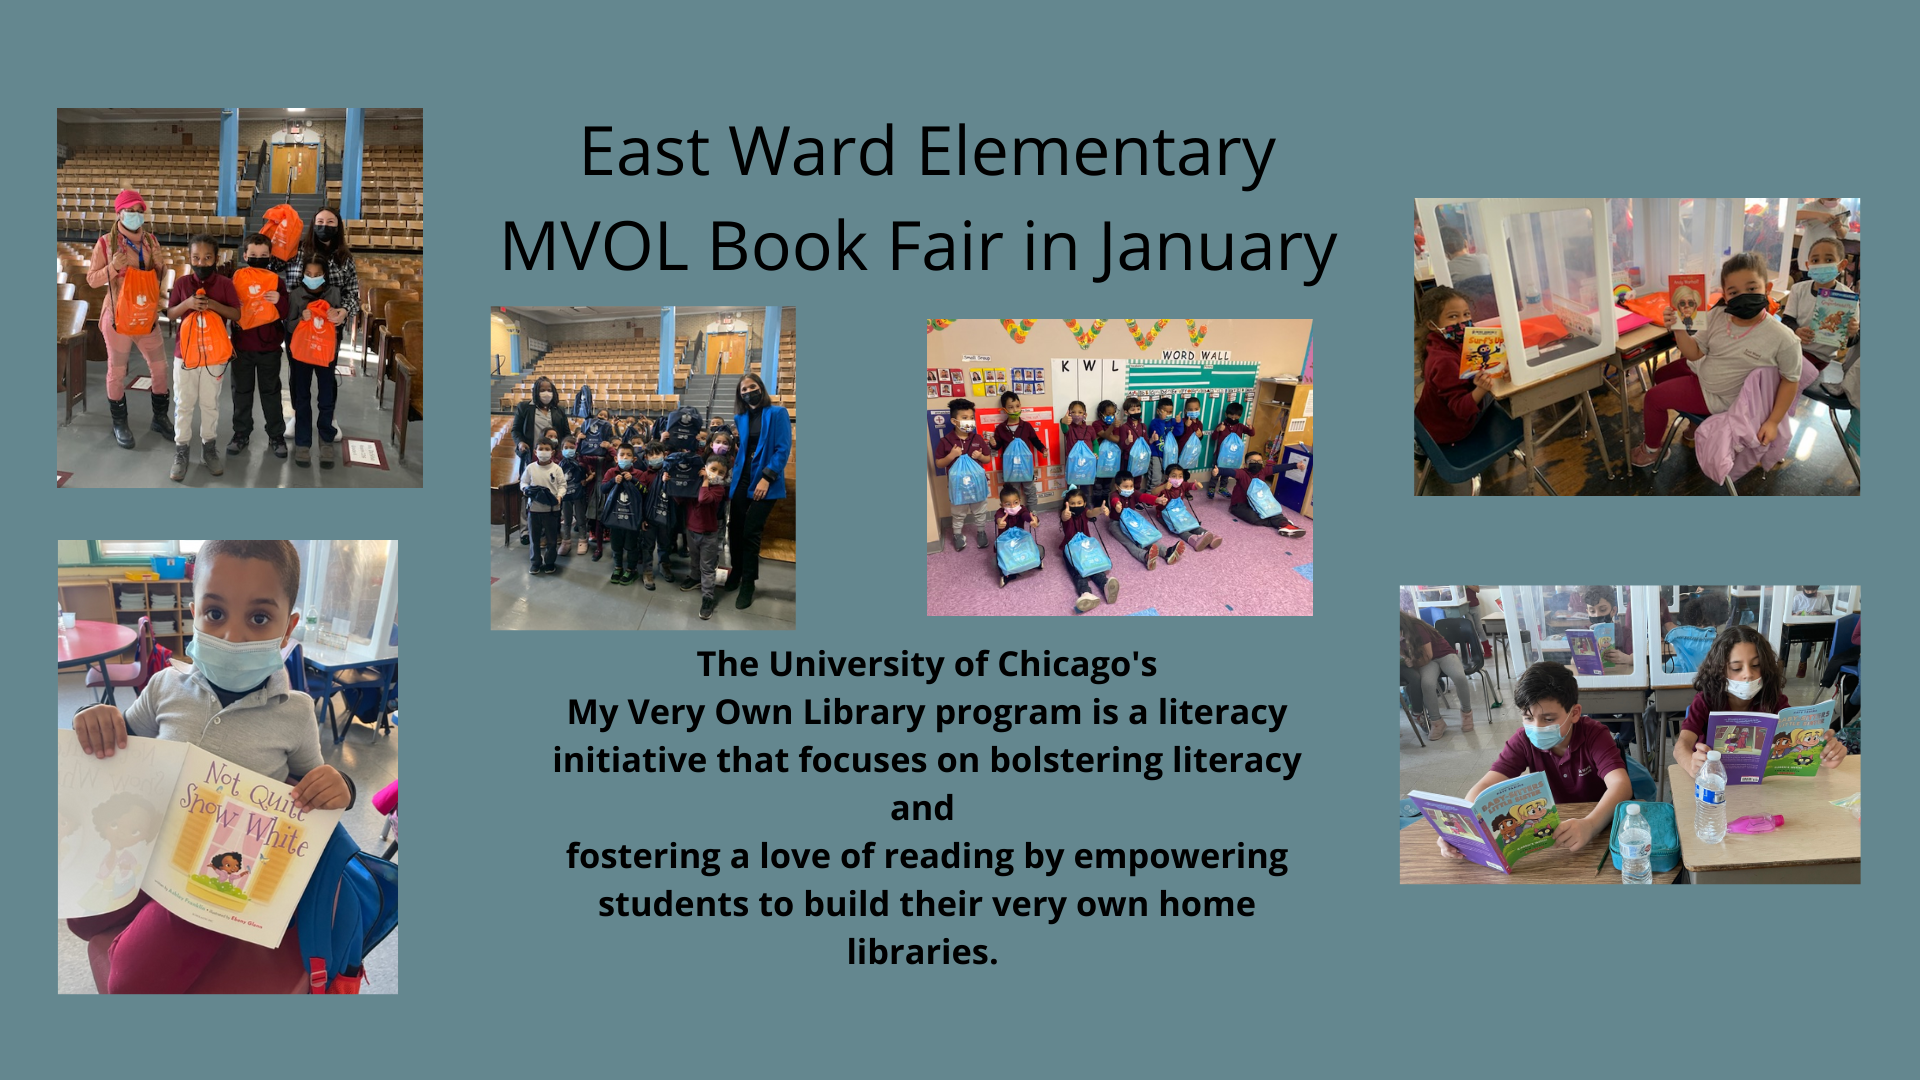 MVOL Book Fair in January